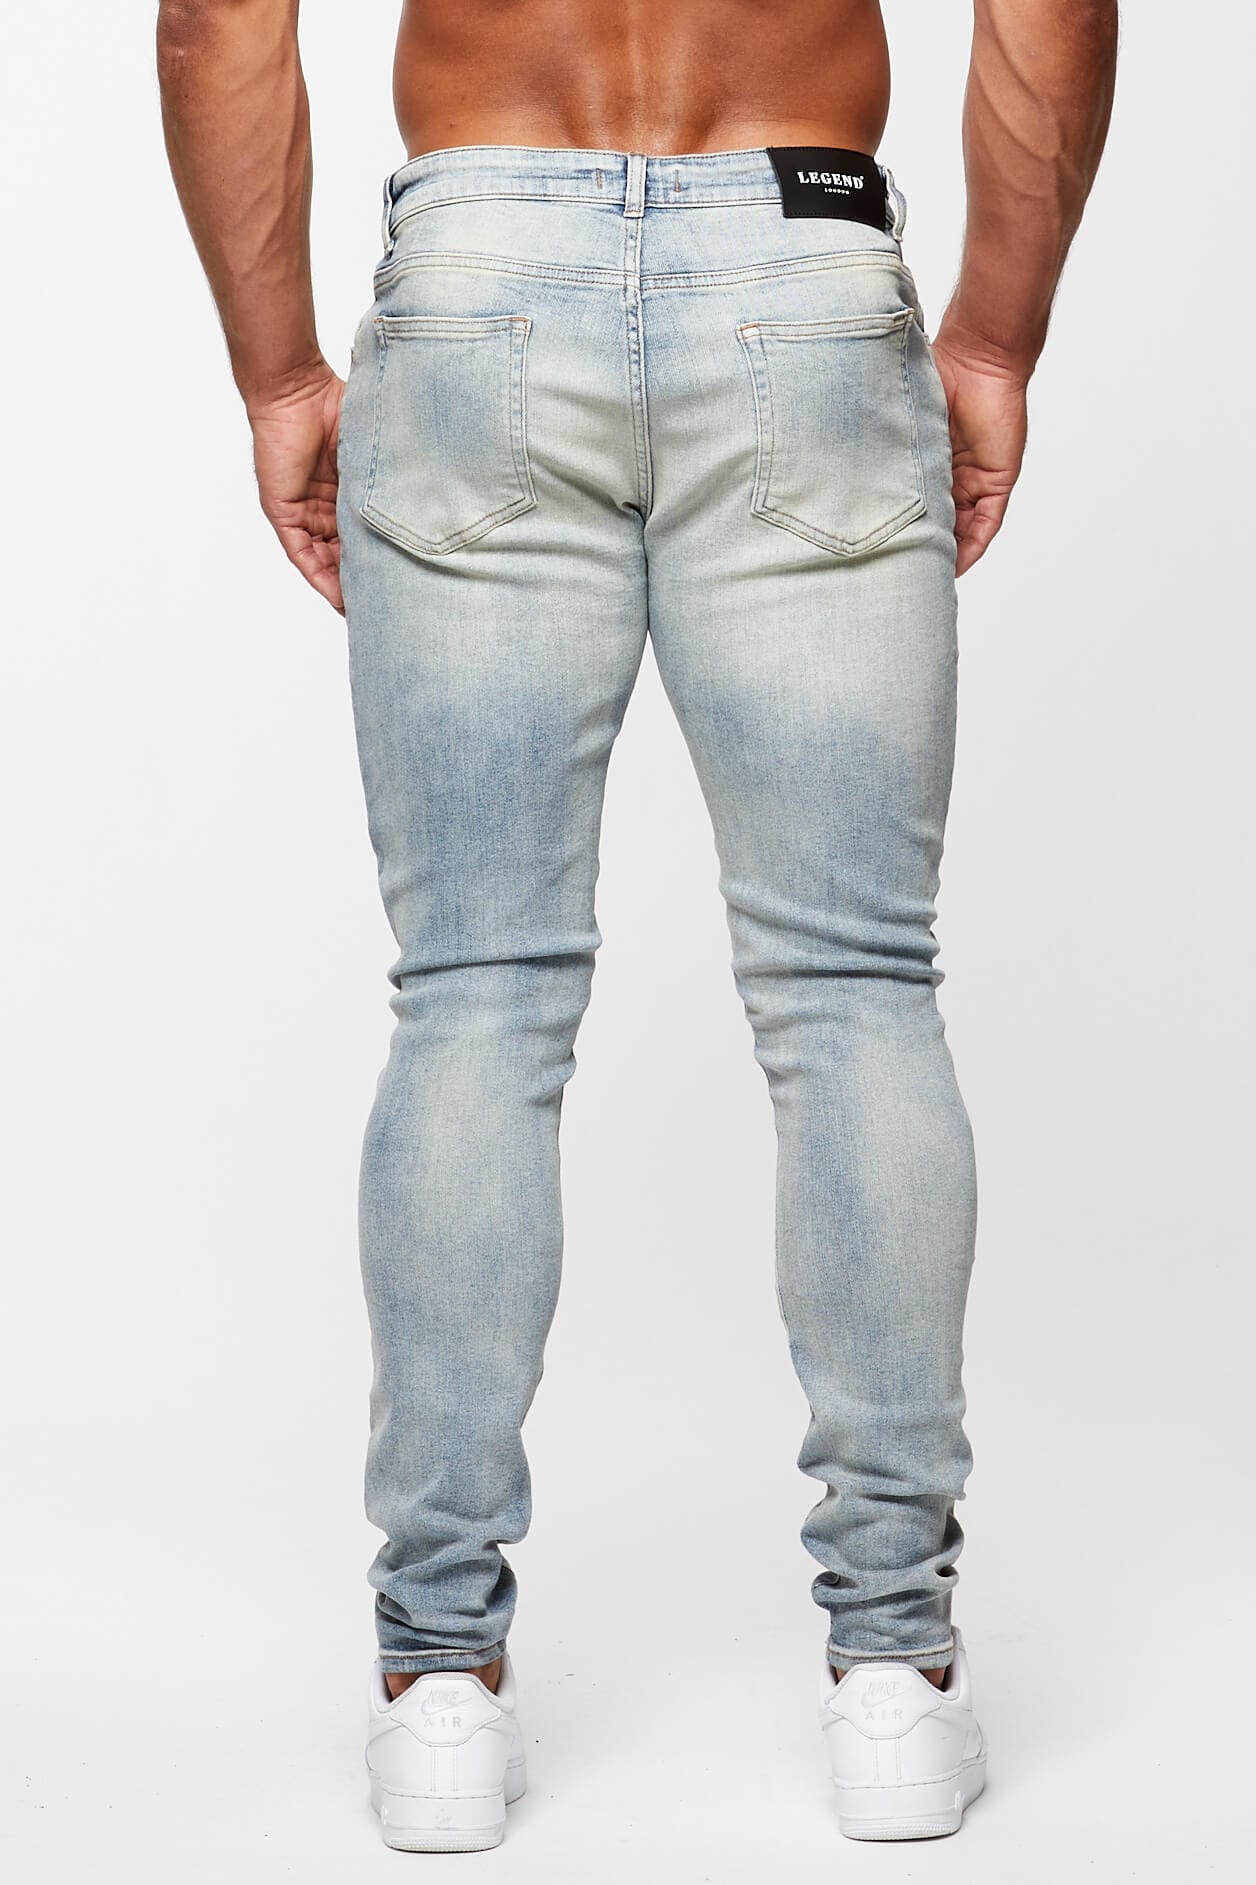 Legend London Jeans SKINNY FIT JEANS - SAND WASH BLUE OVERDYE